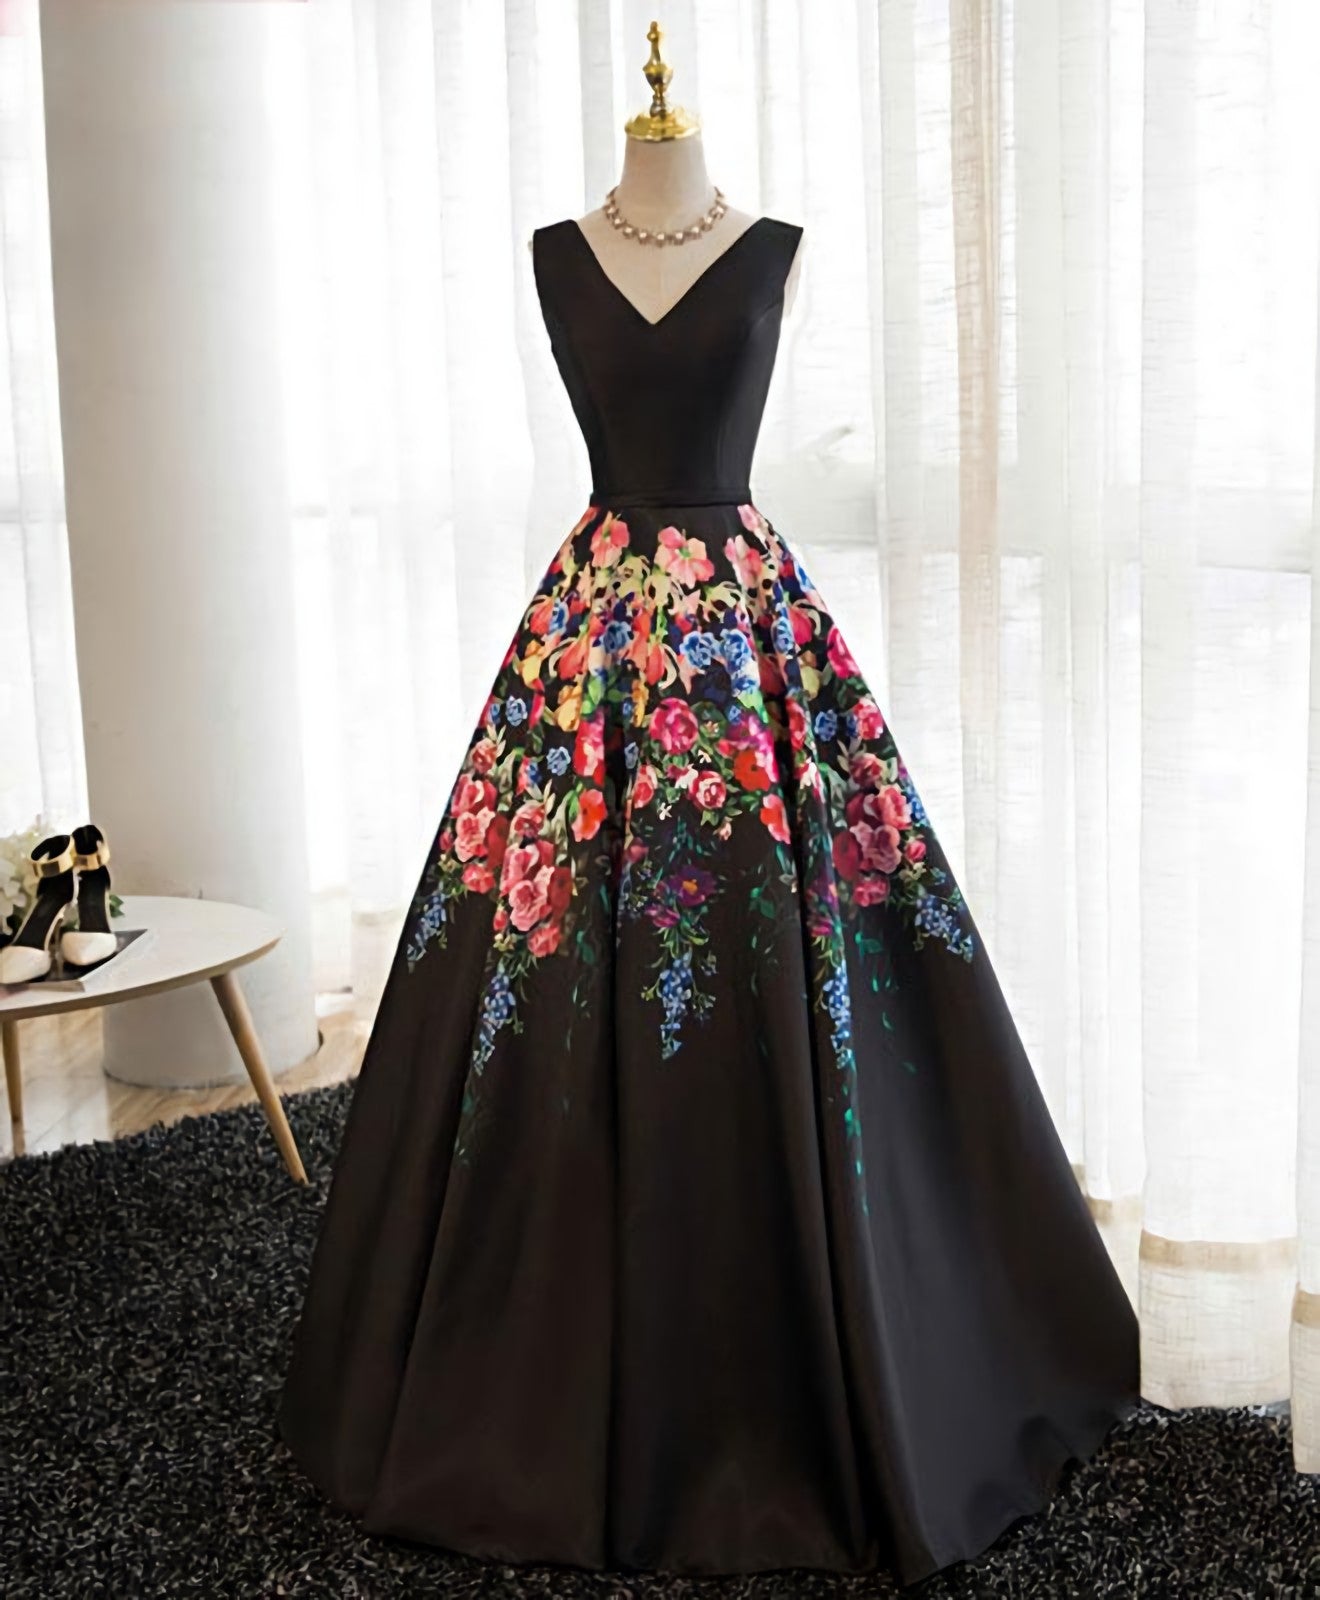 Black V Neck Floral Patterns Long Corset Prom Dress, Black Evening Dress outfit, Prom Dresses Styles